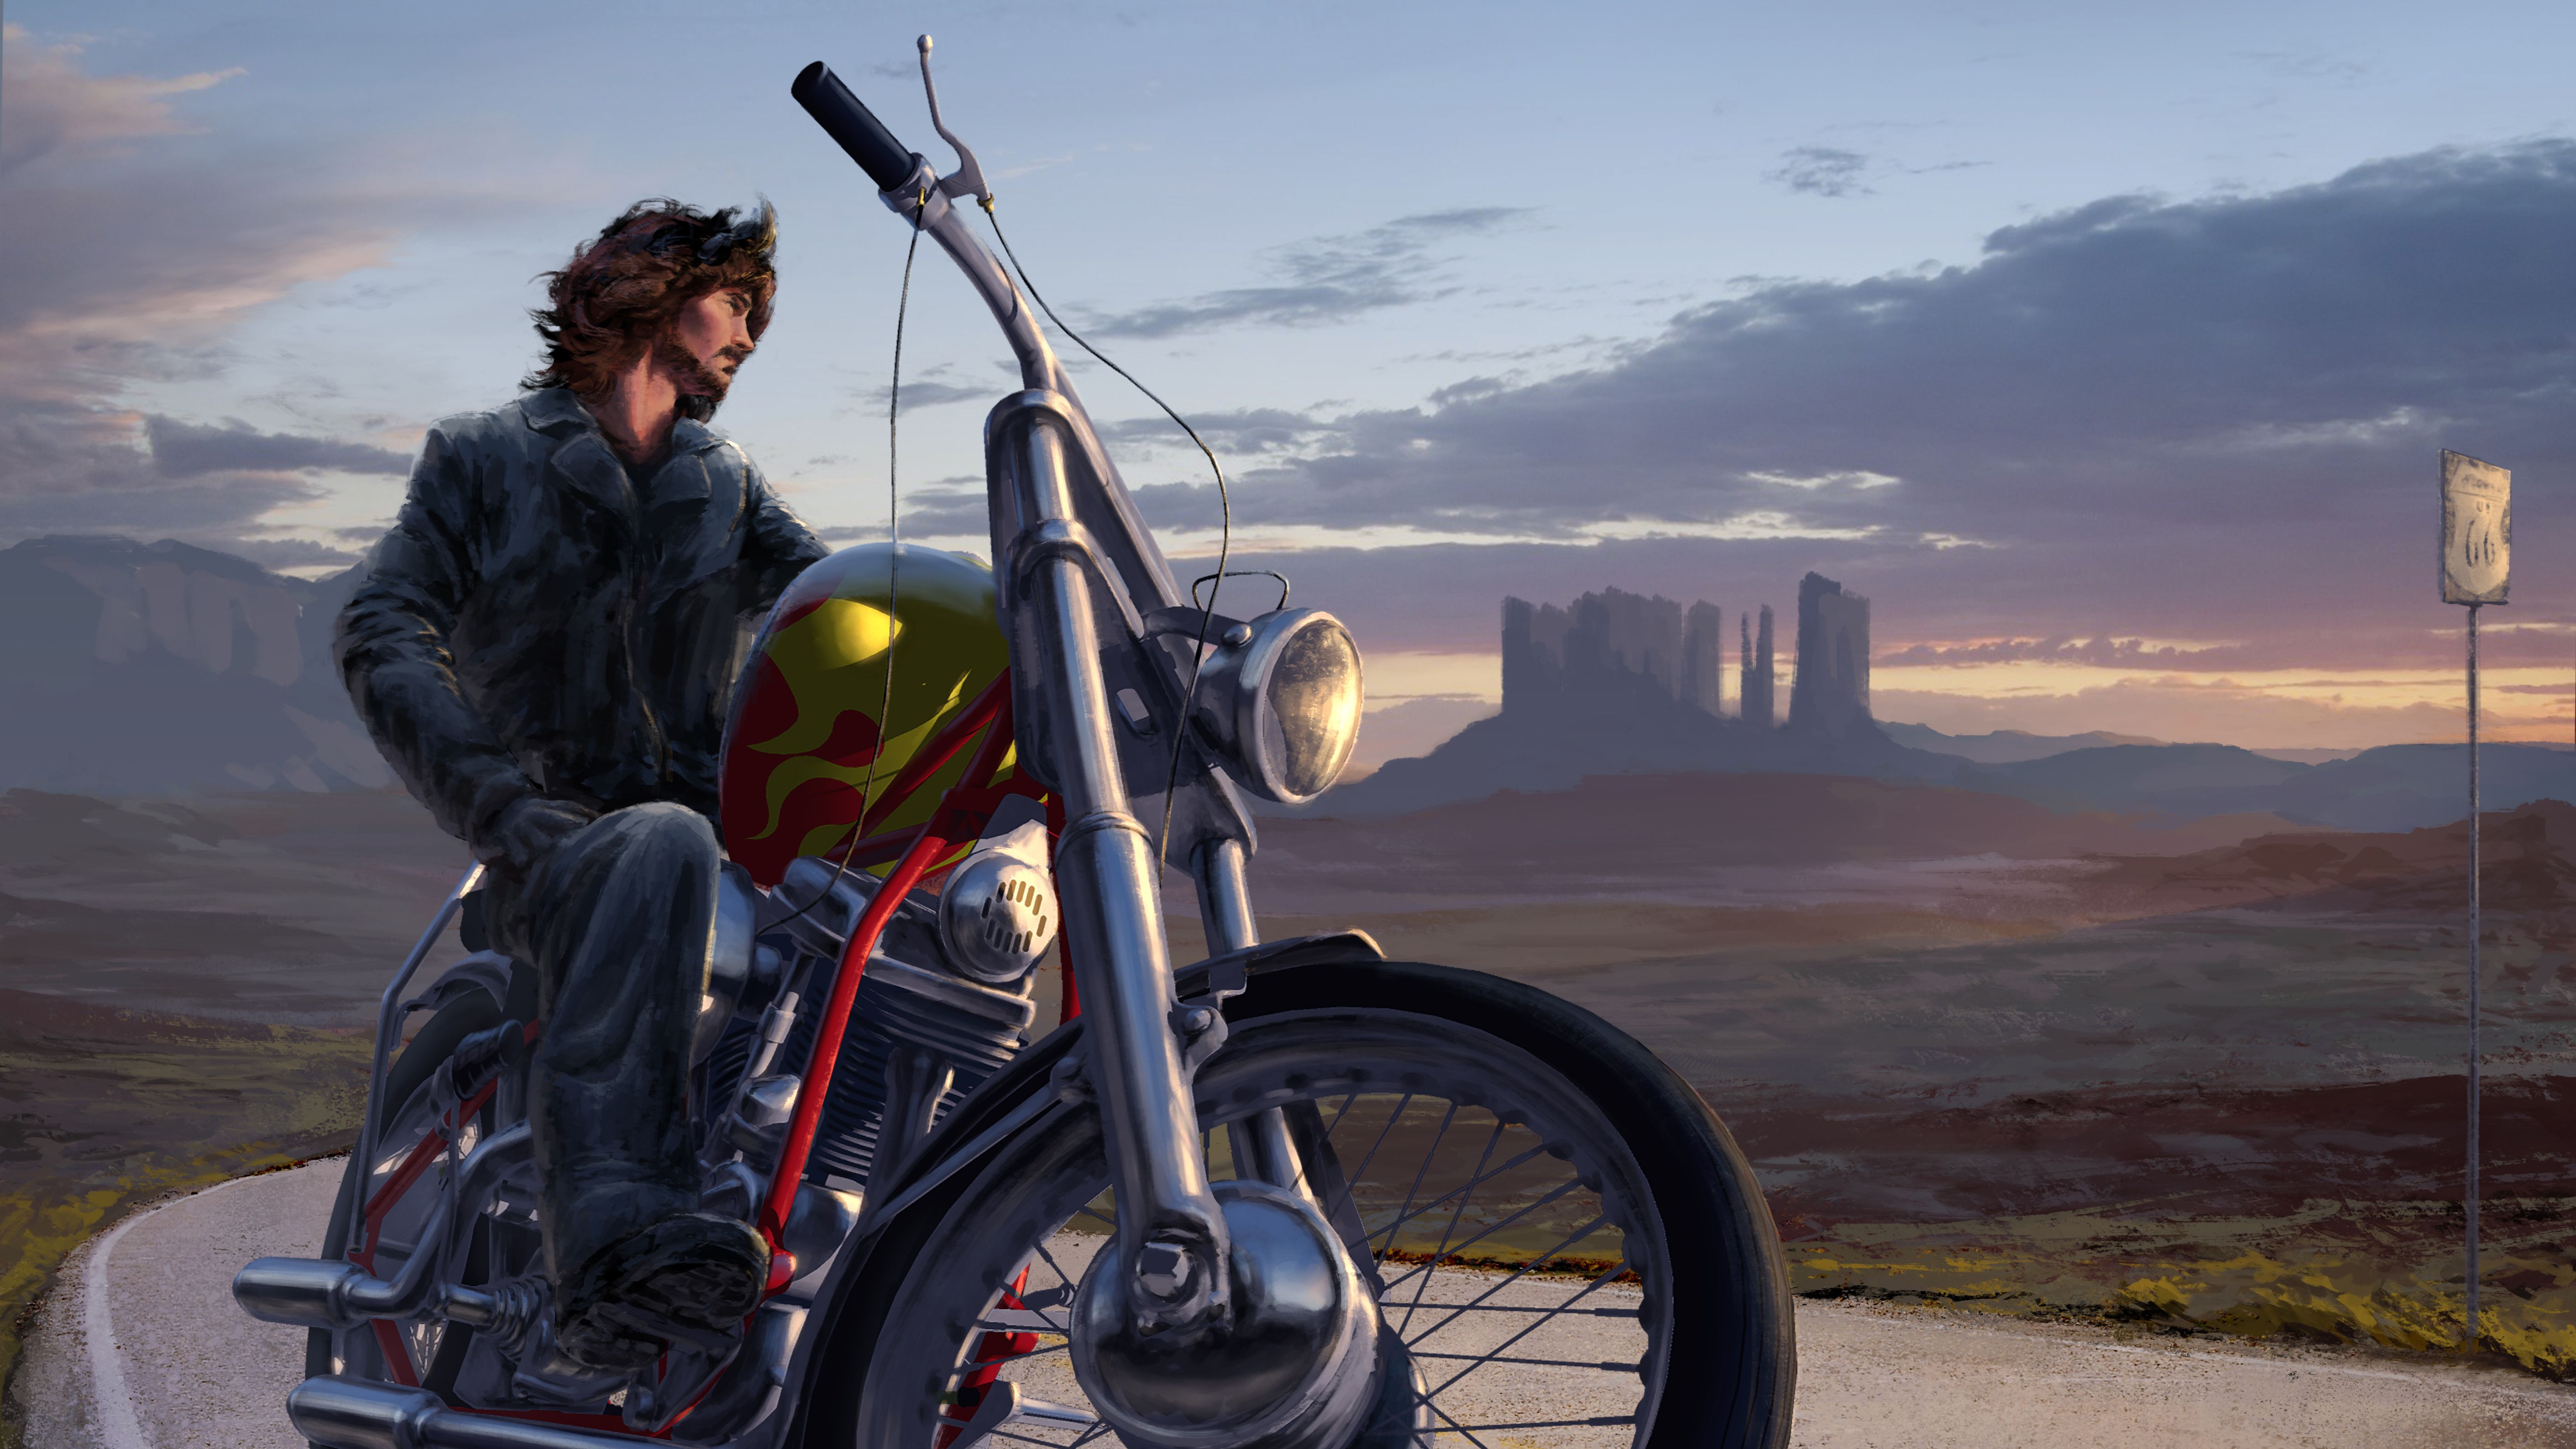 Bike Rider Digital Art 5k, HD Artist, 4k Wallpaper, Image